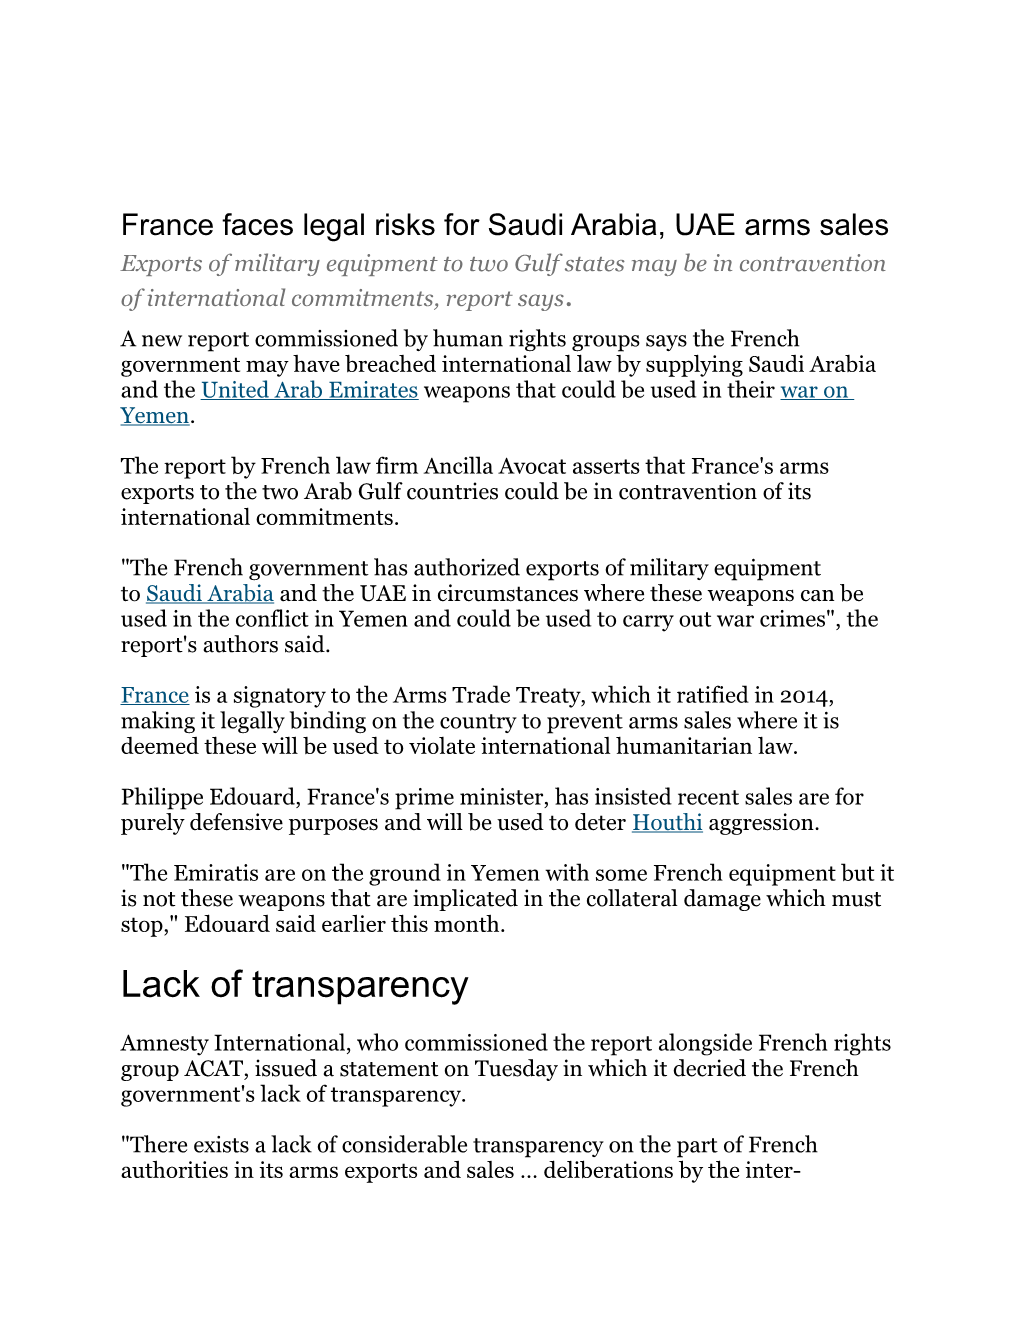 France Faces Legal Risks for Saudi Arabia, UAE Arms Sales